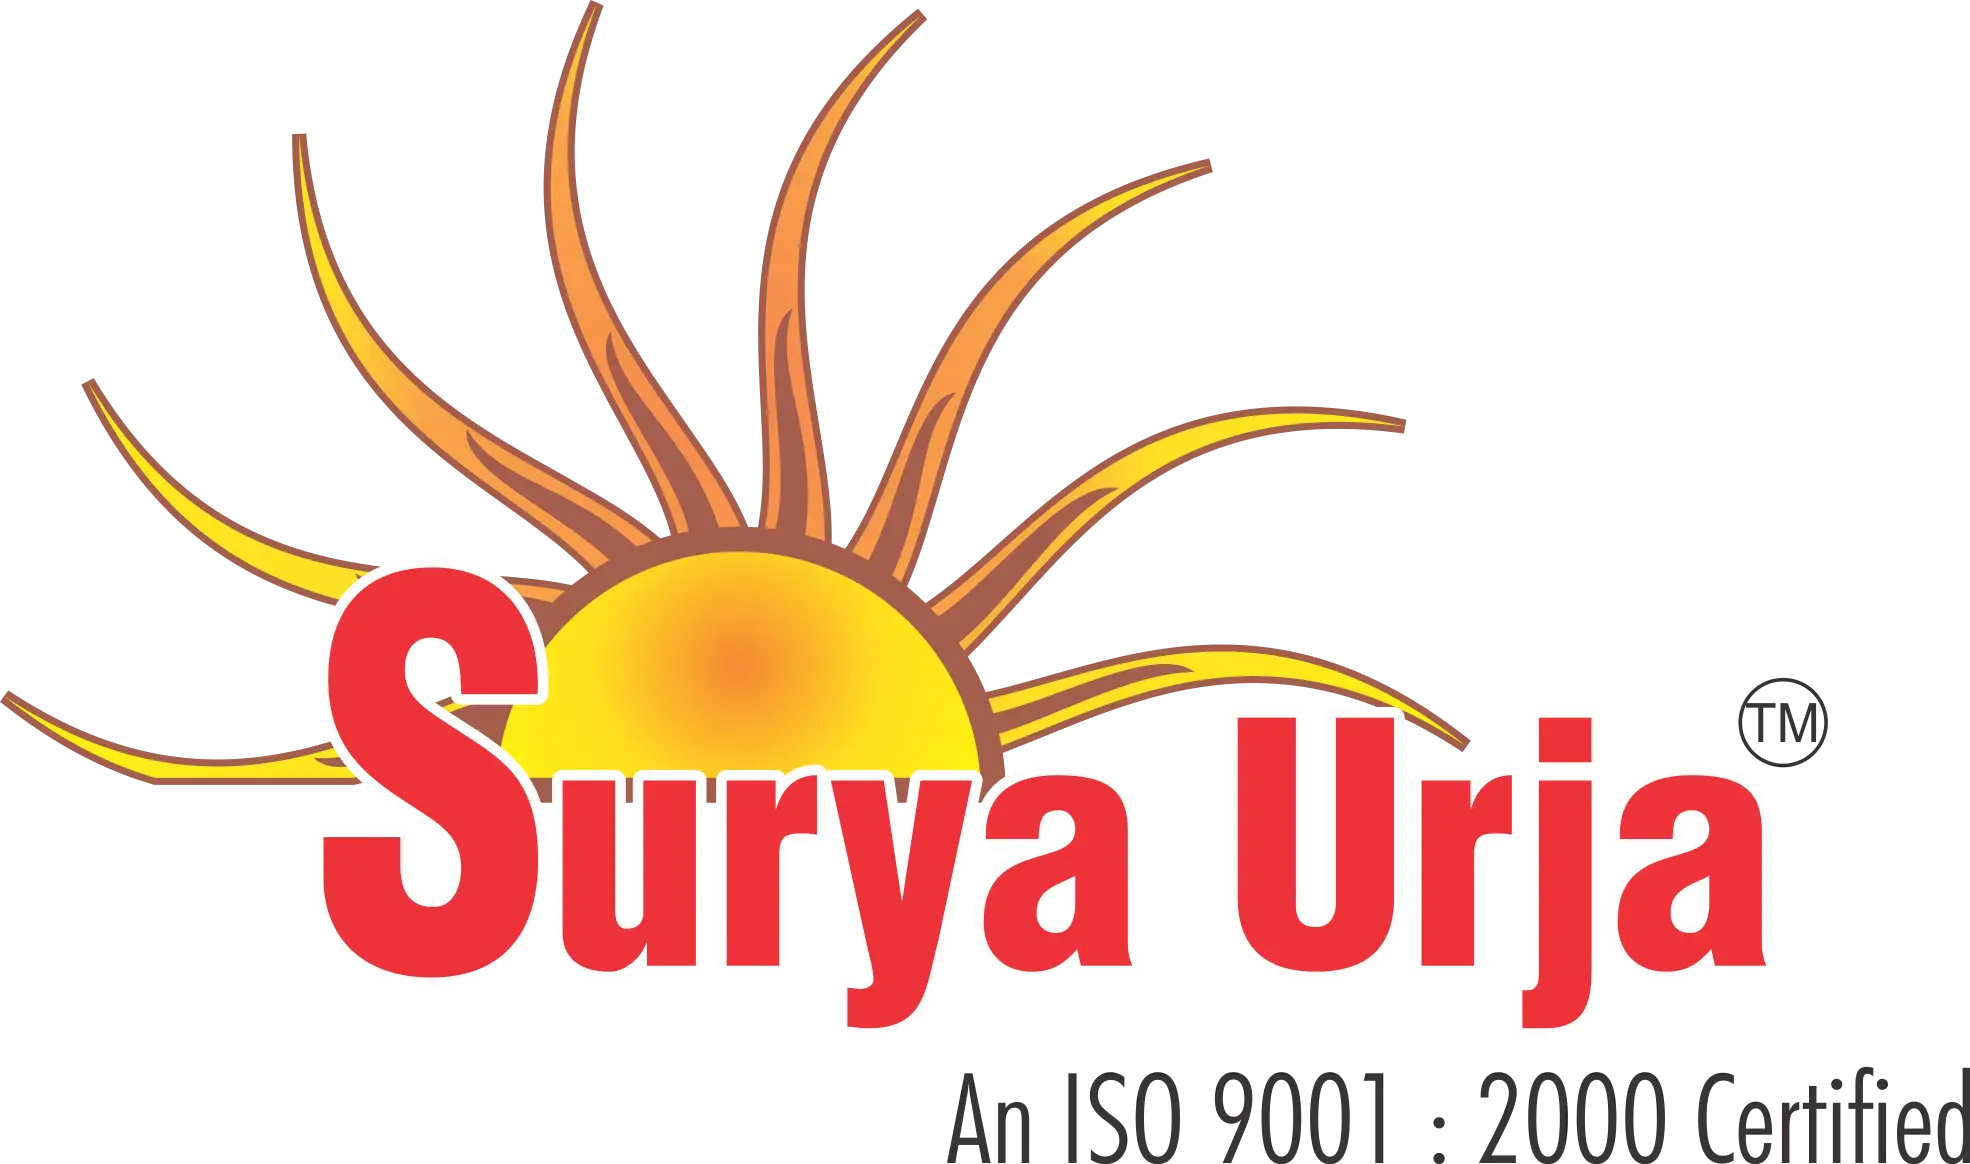 Surya Urja